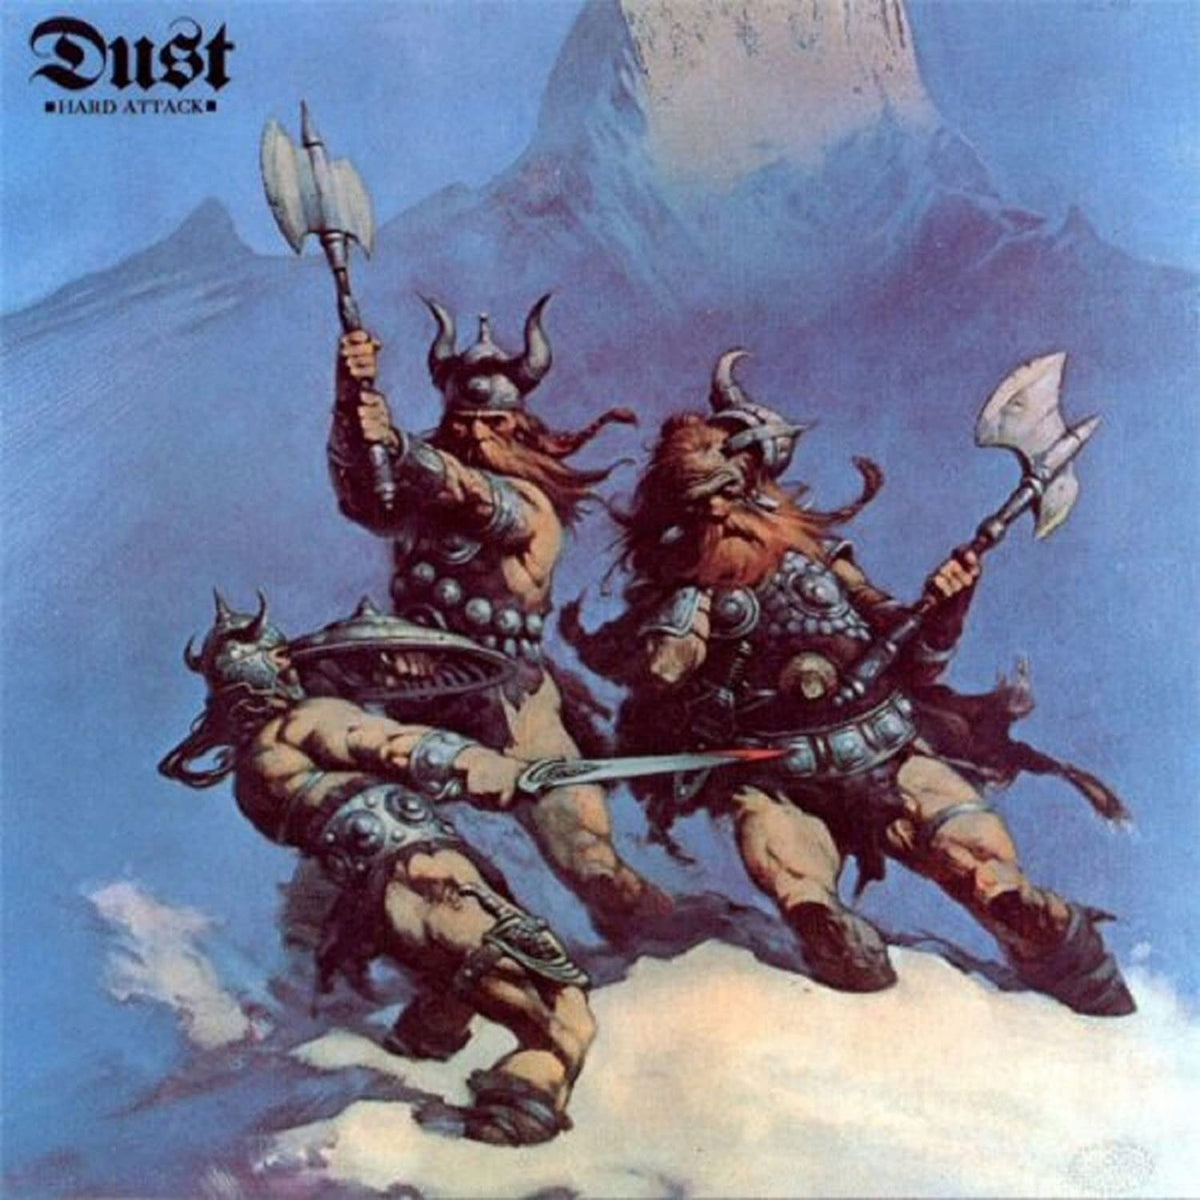 Dust - Hard Attack LP